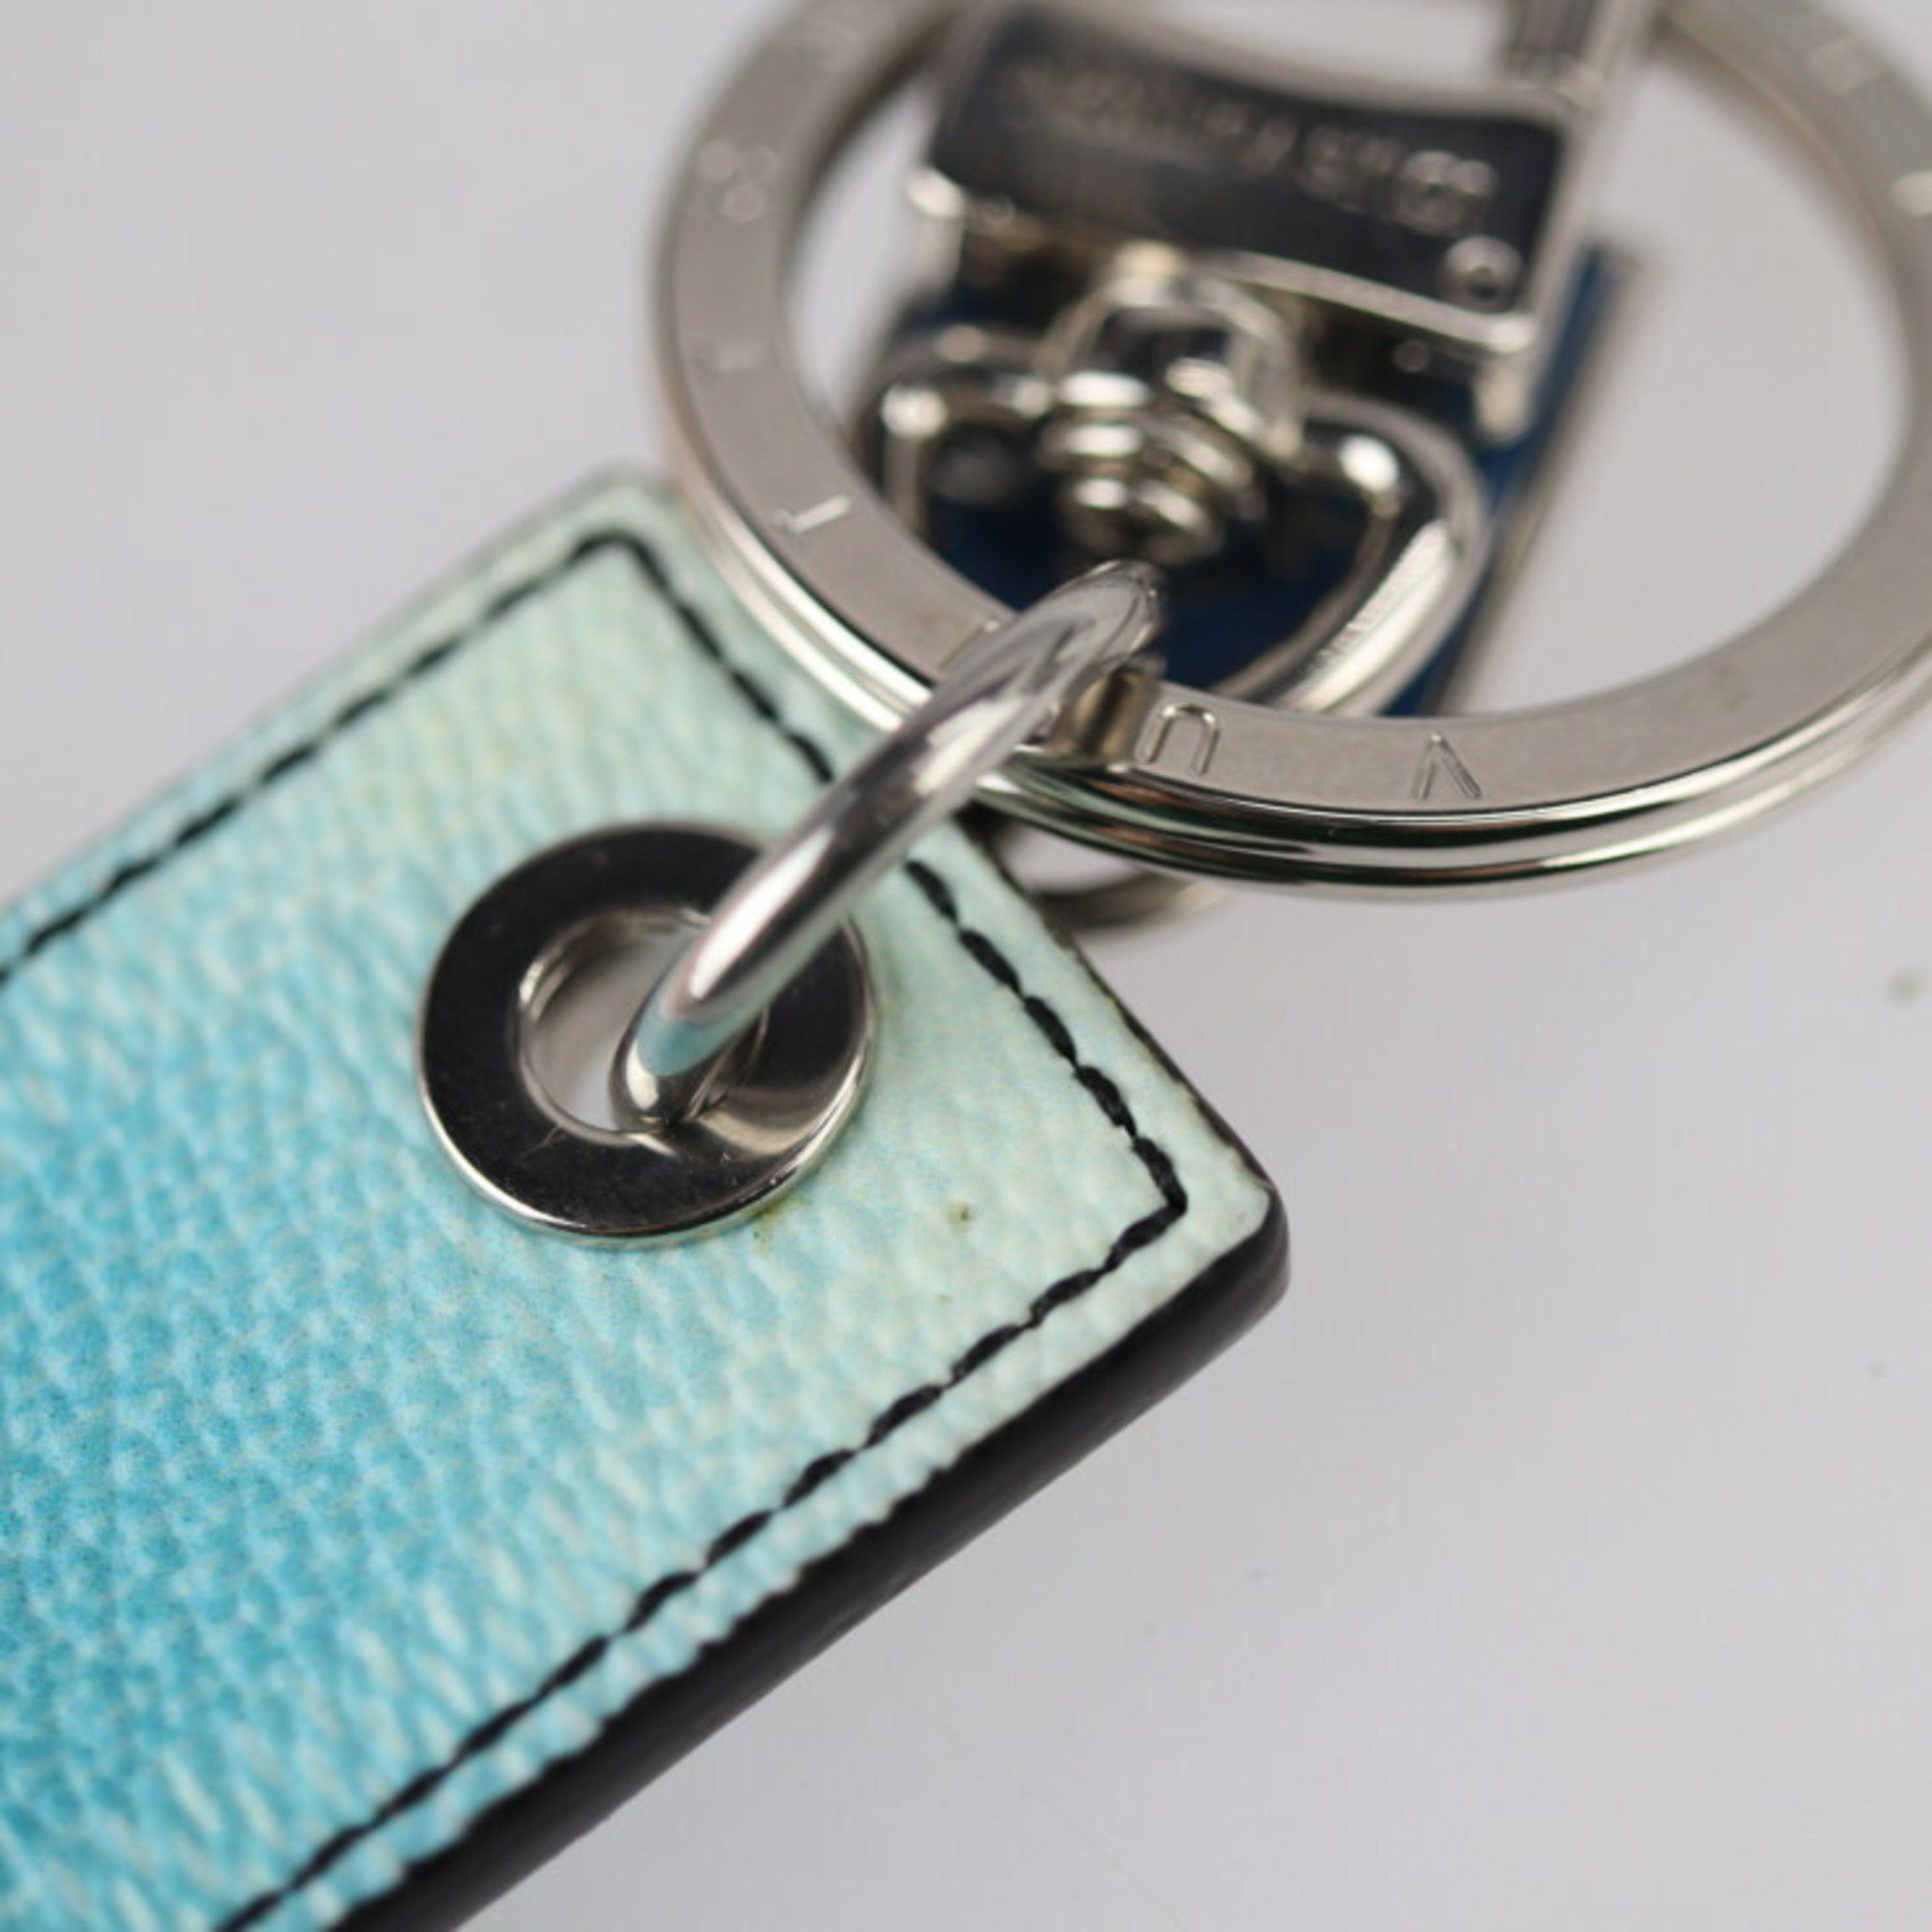 LOUIS VUITTON Louis Vuitton Portocre Damier Stripes Key Holder M00735 PVC Metal Blue Veil Silver Hardware Ring Bag Charm